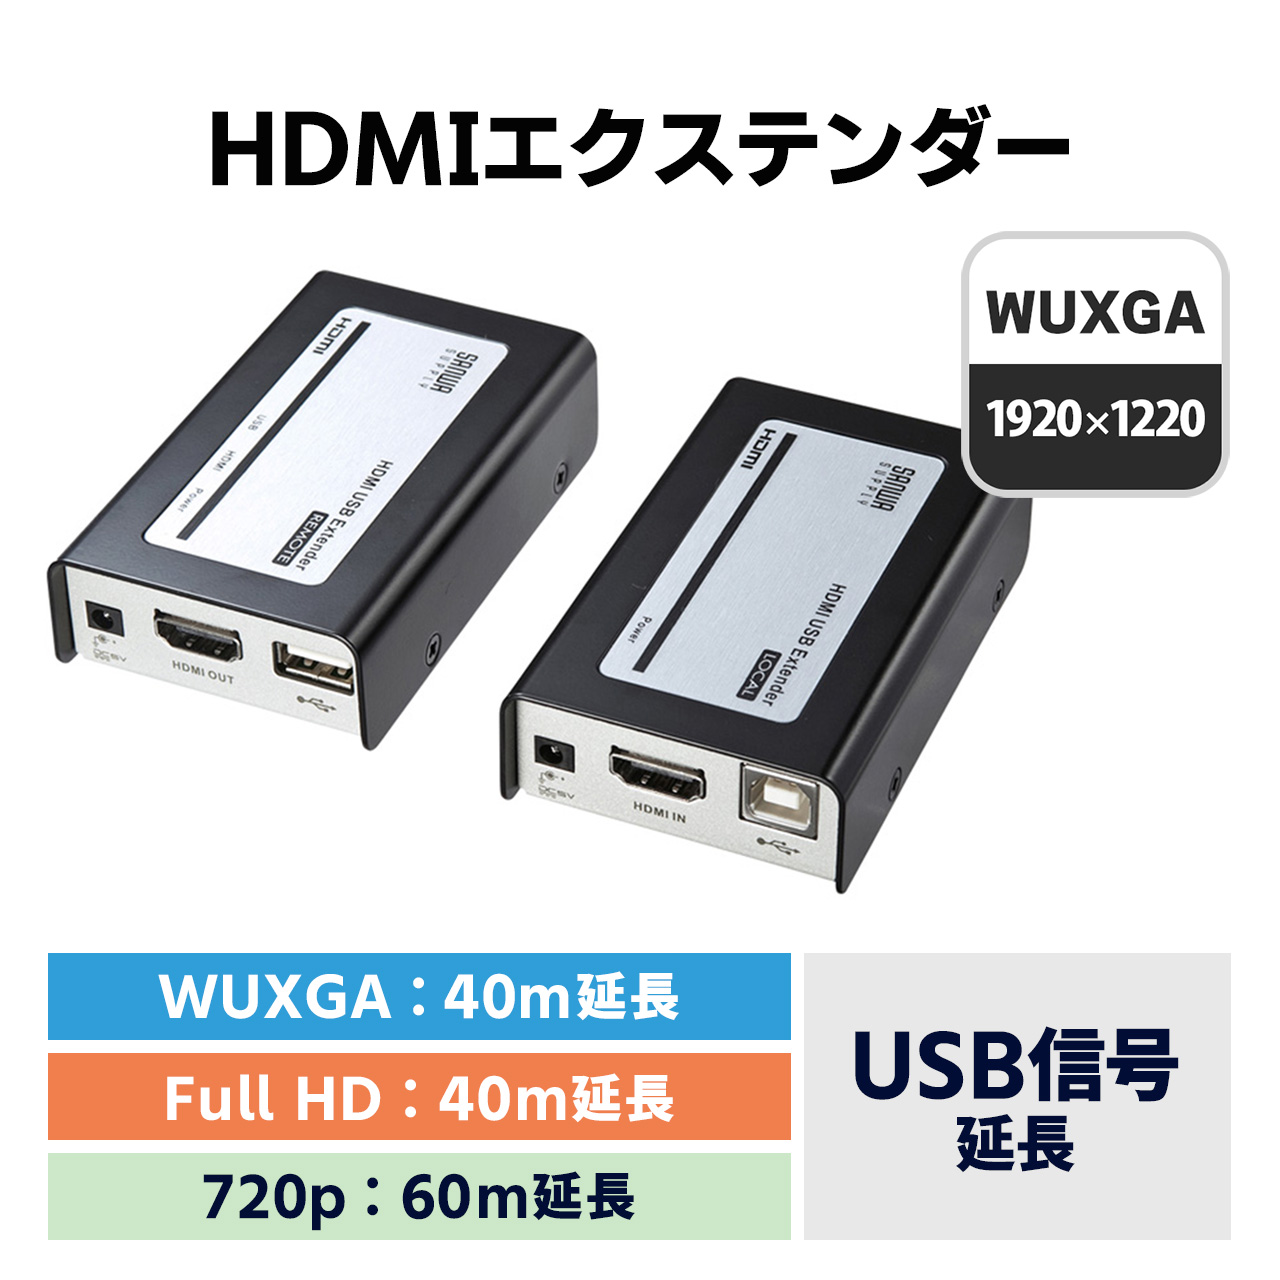 HDMI+USB2.0GNXe_[ tHD 40m  VGA-EXHDU